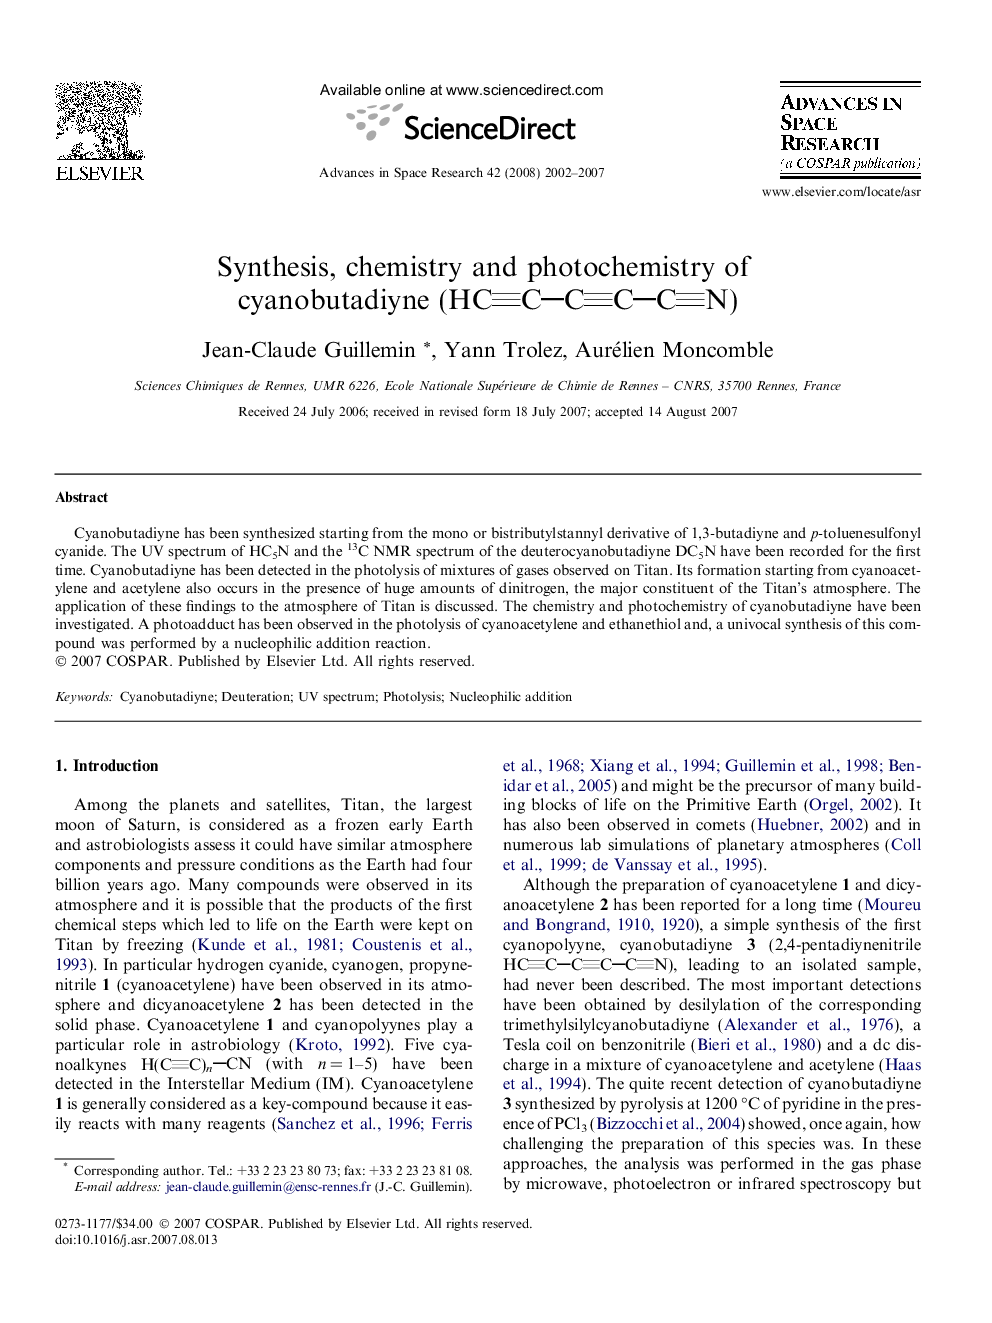 Synthesis, chemistry and photochemistry of cyanobutadiyne (HCCCCCN)